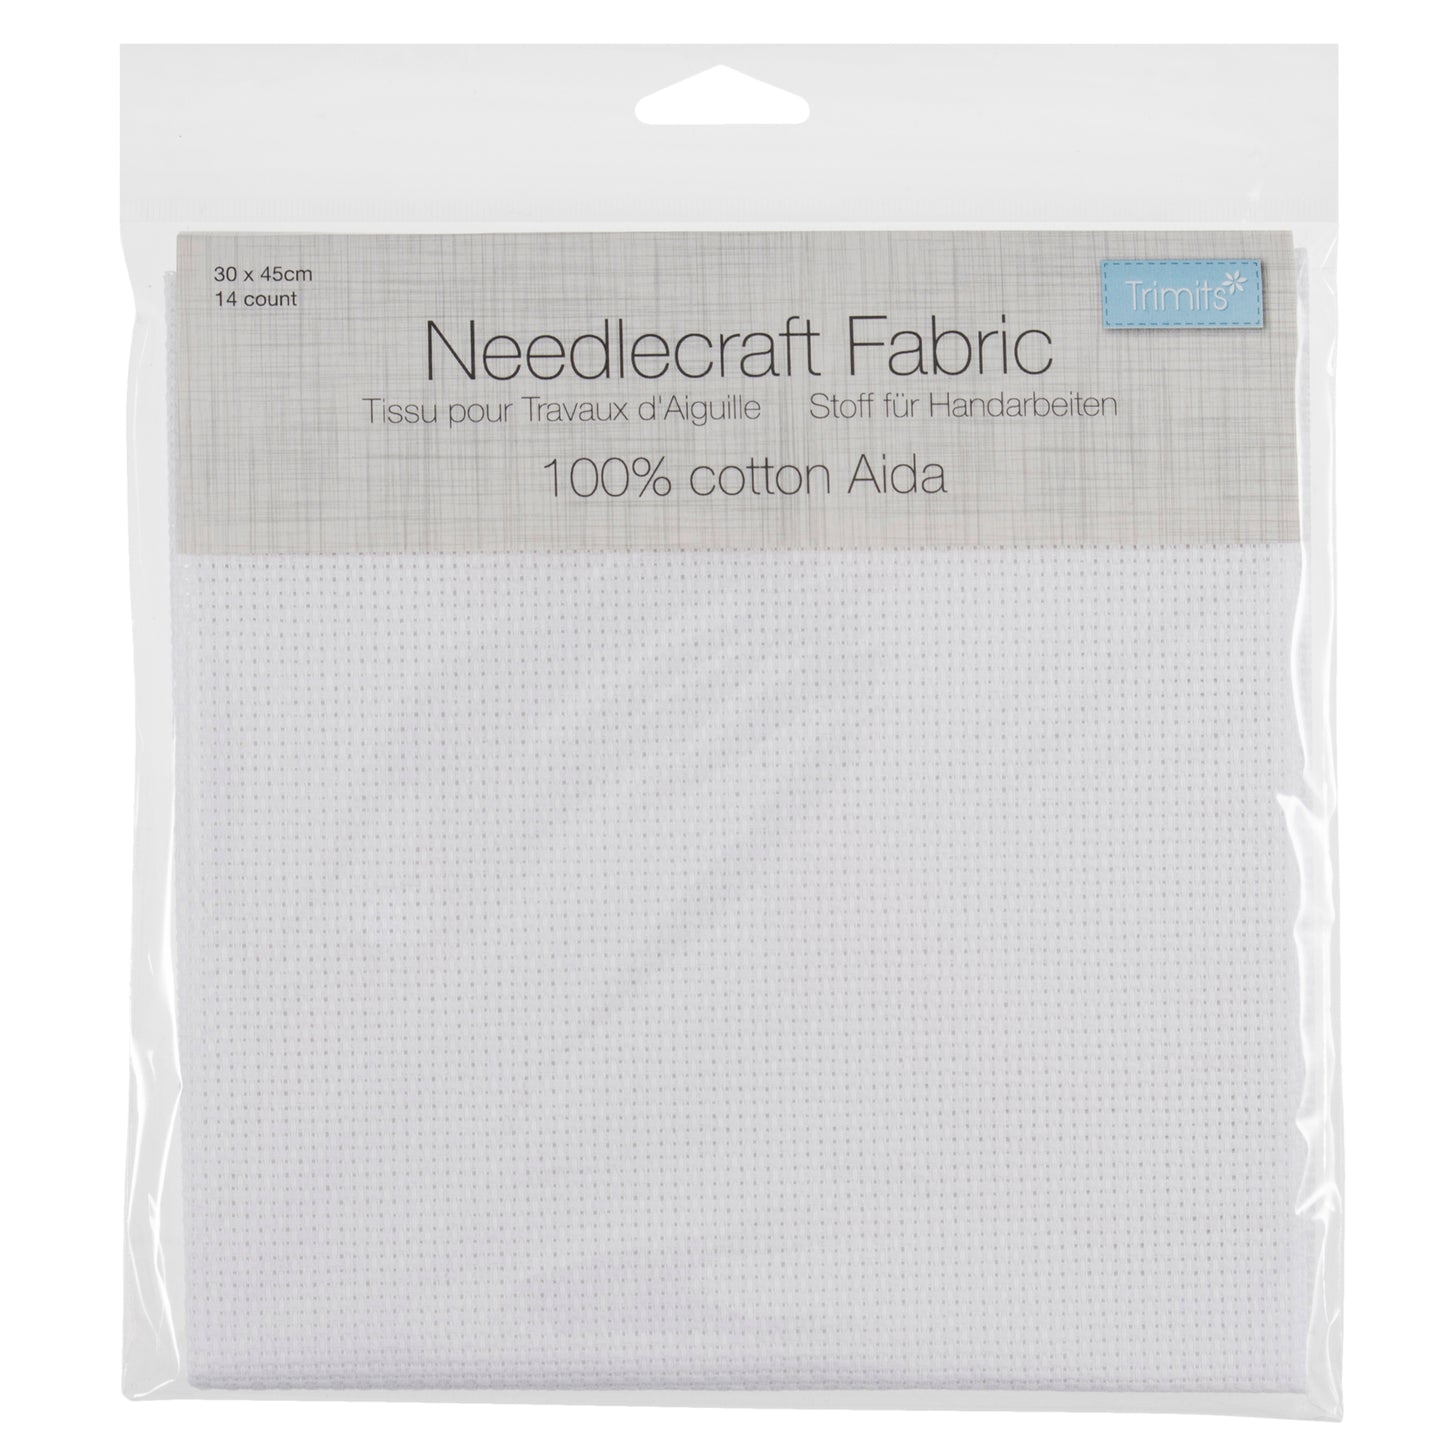 Needlecraft Fabric: Aida: 14 Count: 45 x 30cm: White